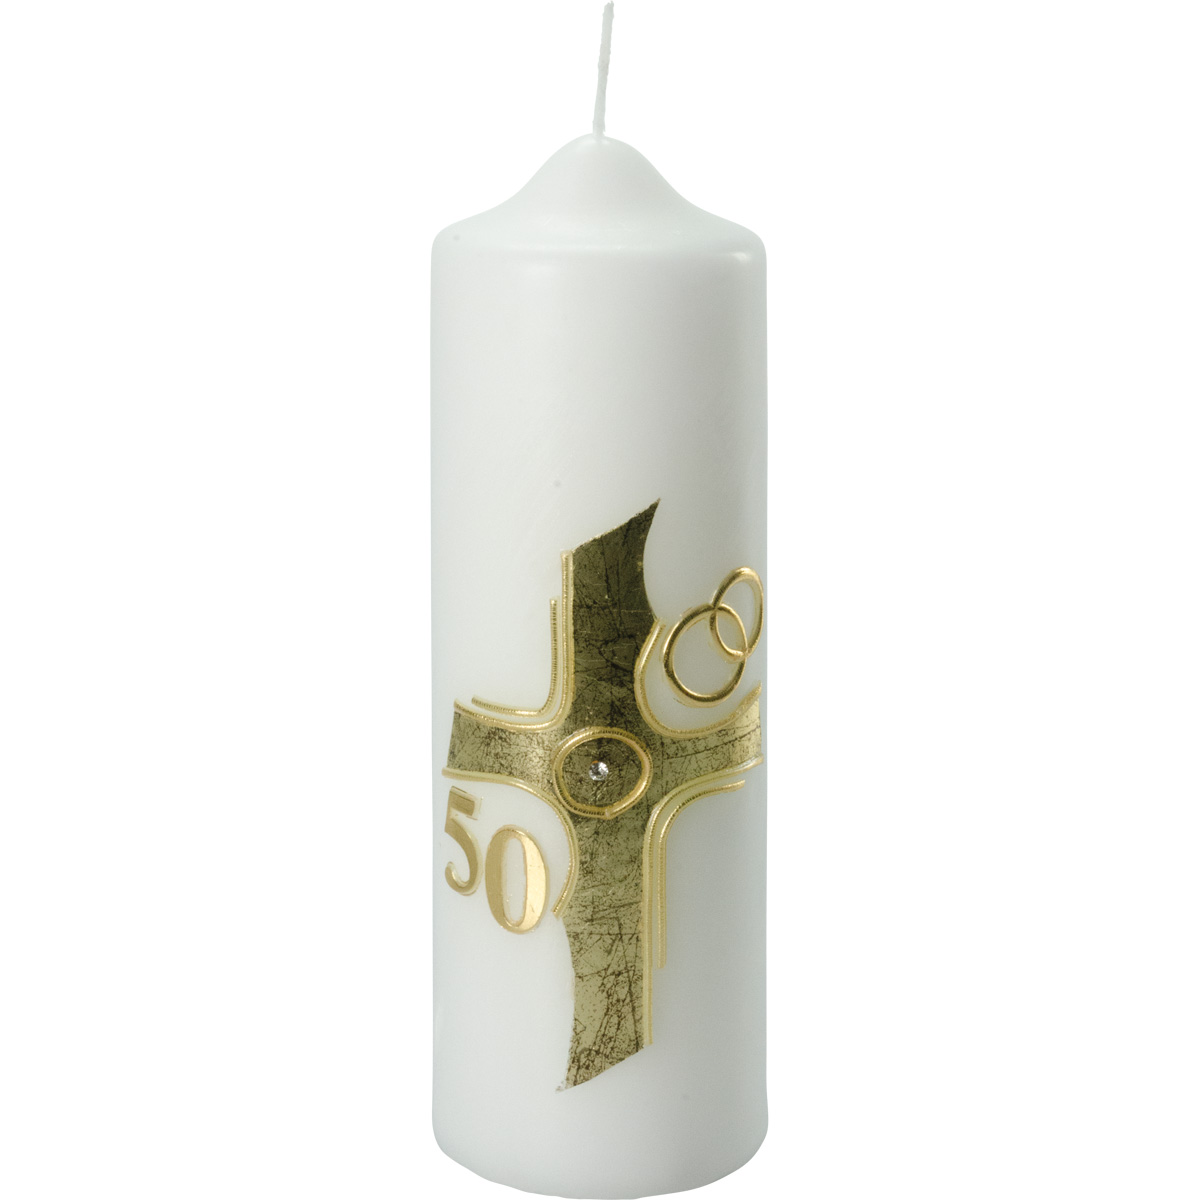 Goldene-Hochzeitskerze, goldenes Kreuz, Ringe, -50-, 225x70, Nr.959